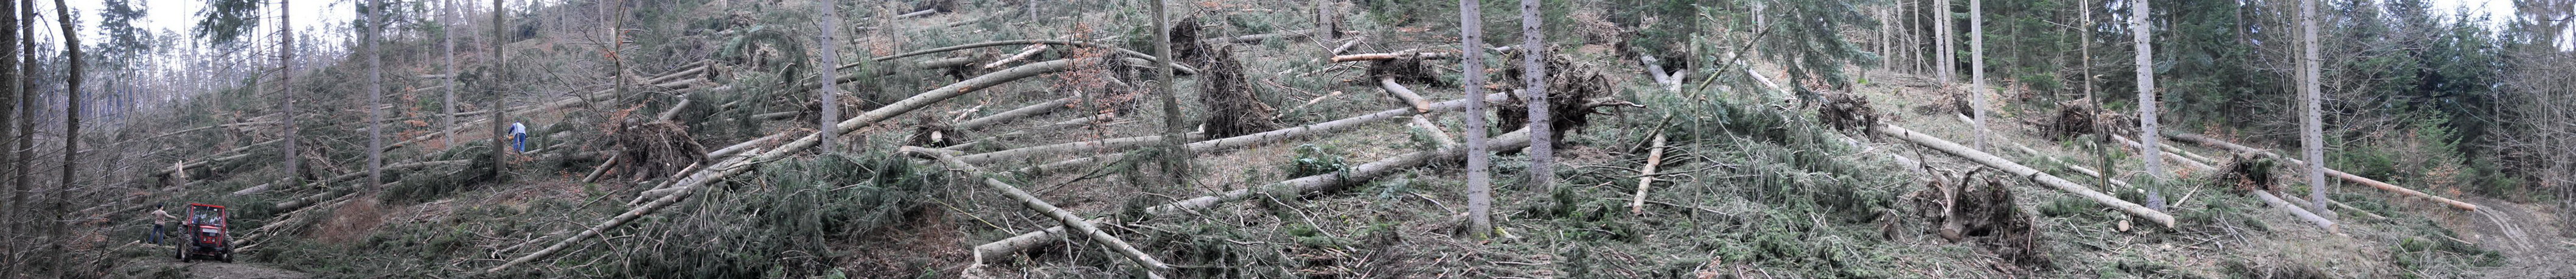 26. Jnner 2008: Sturm Paula legt mehr als 6 Millionen Festmeter Holz um